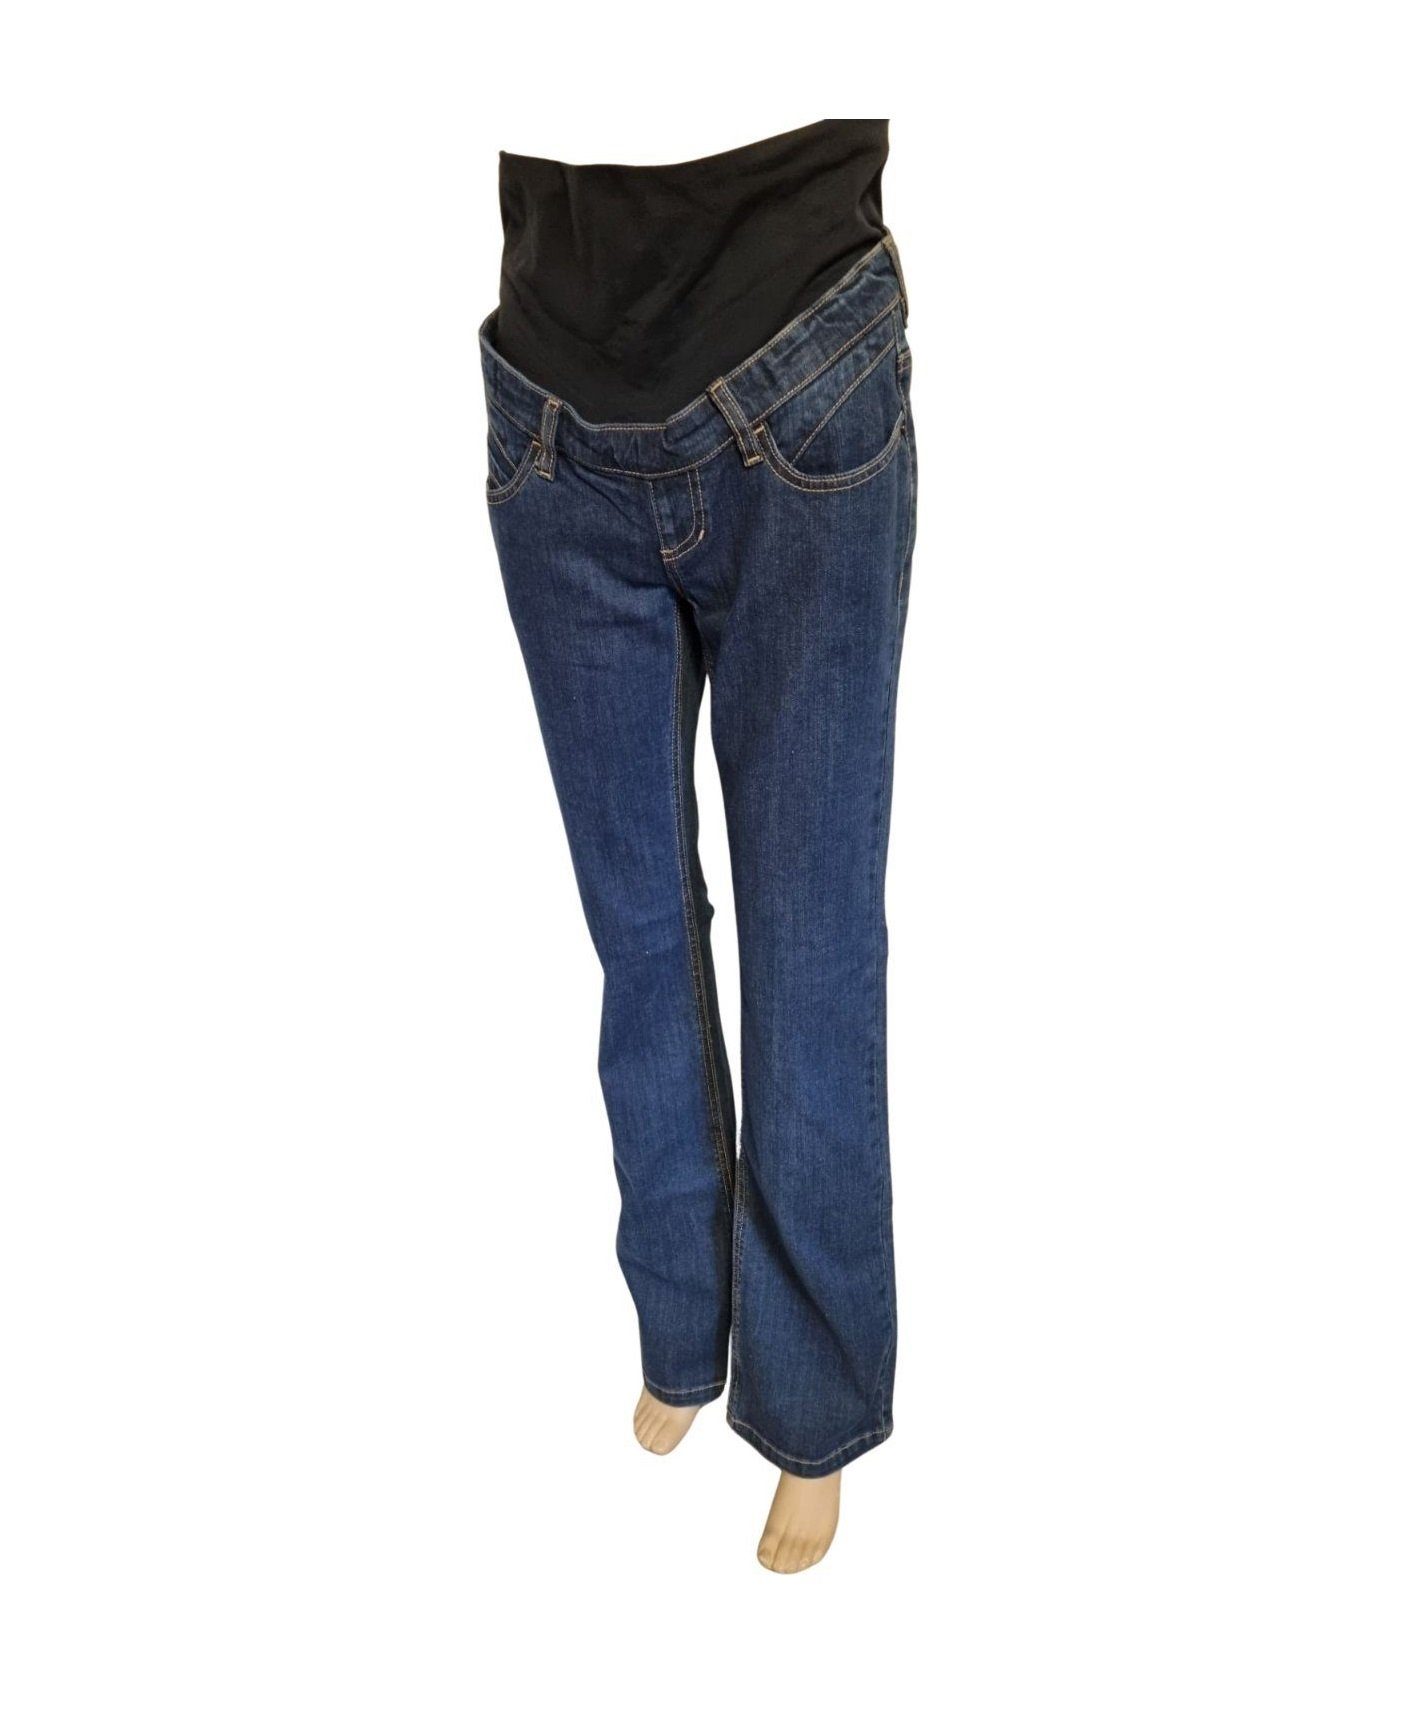 Bellybutton Umstandshose G-10898 Jeans dunkelblau Denim Boot Cut